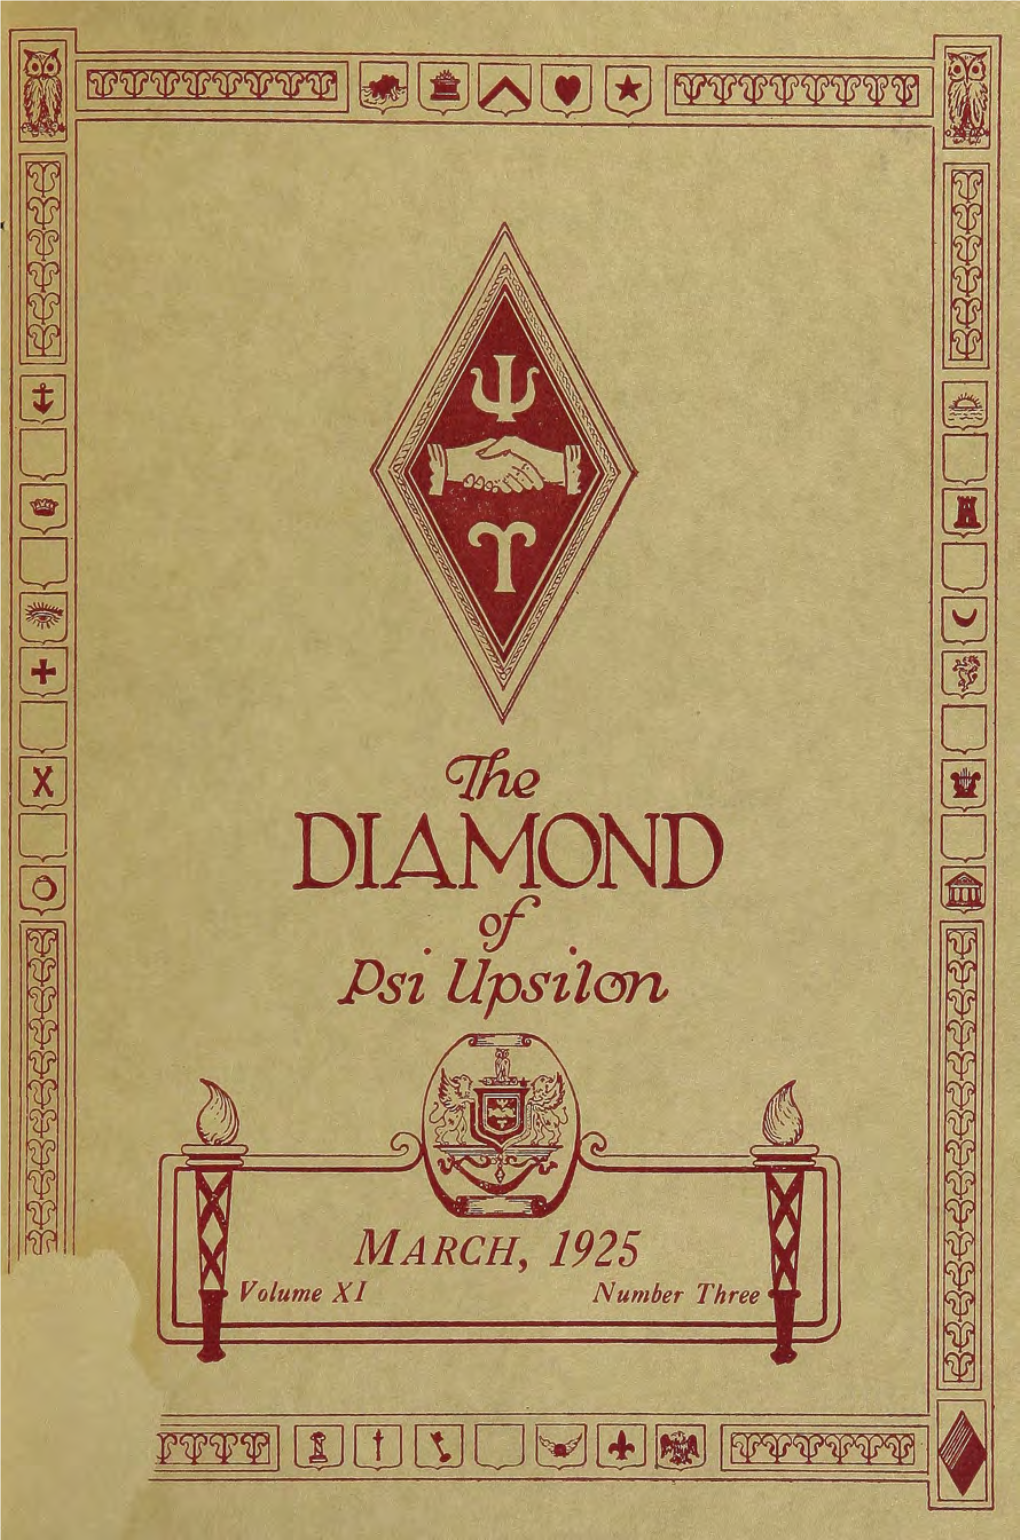 The Diamond of Psi Upsilon Mar 1925